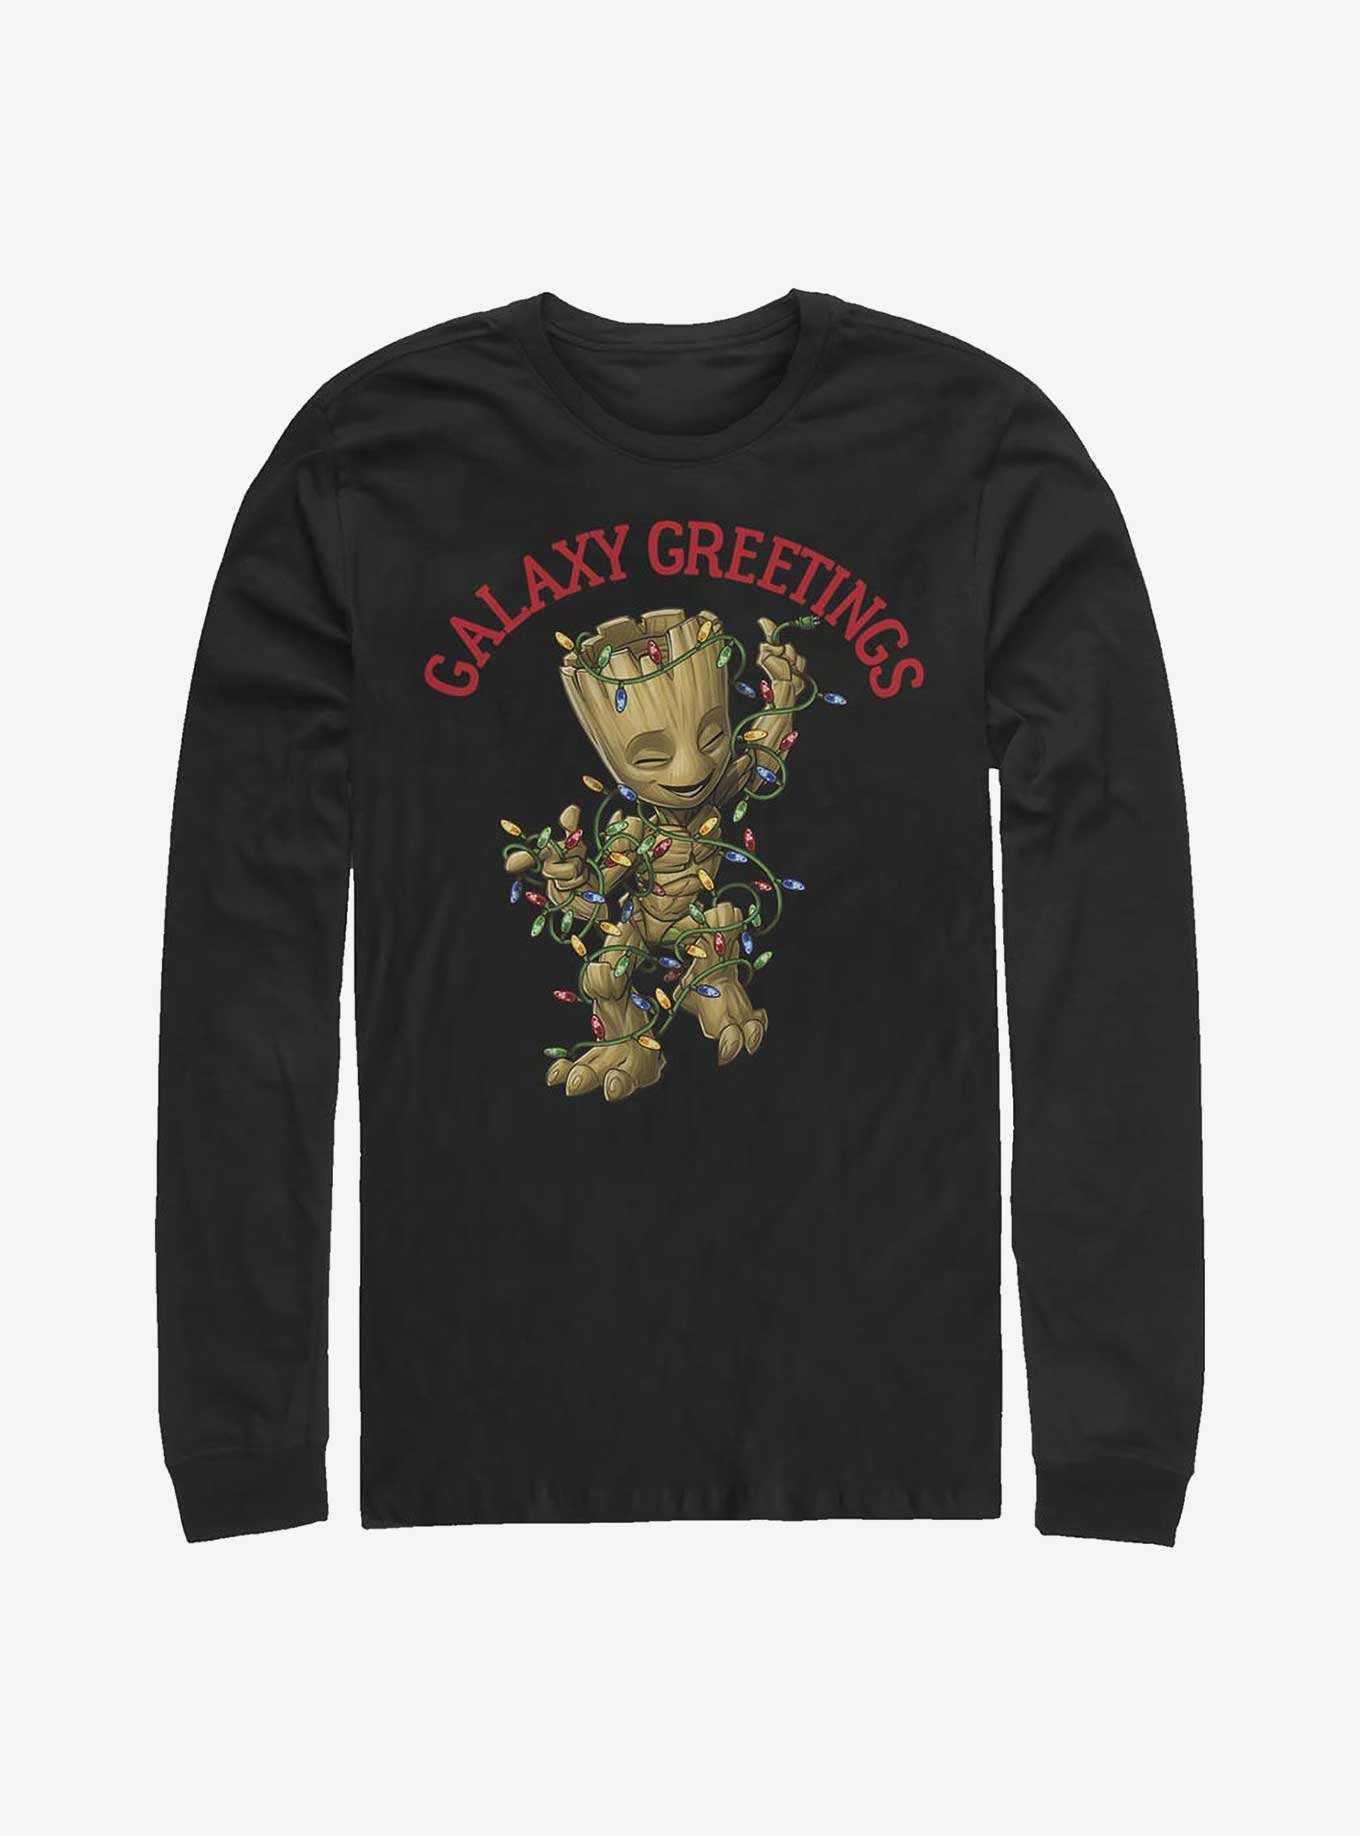 Marvel Galaxy Greetings Baby Groot Long-Sleeve T-Shirt, , hi-res